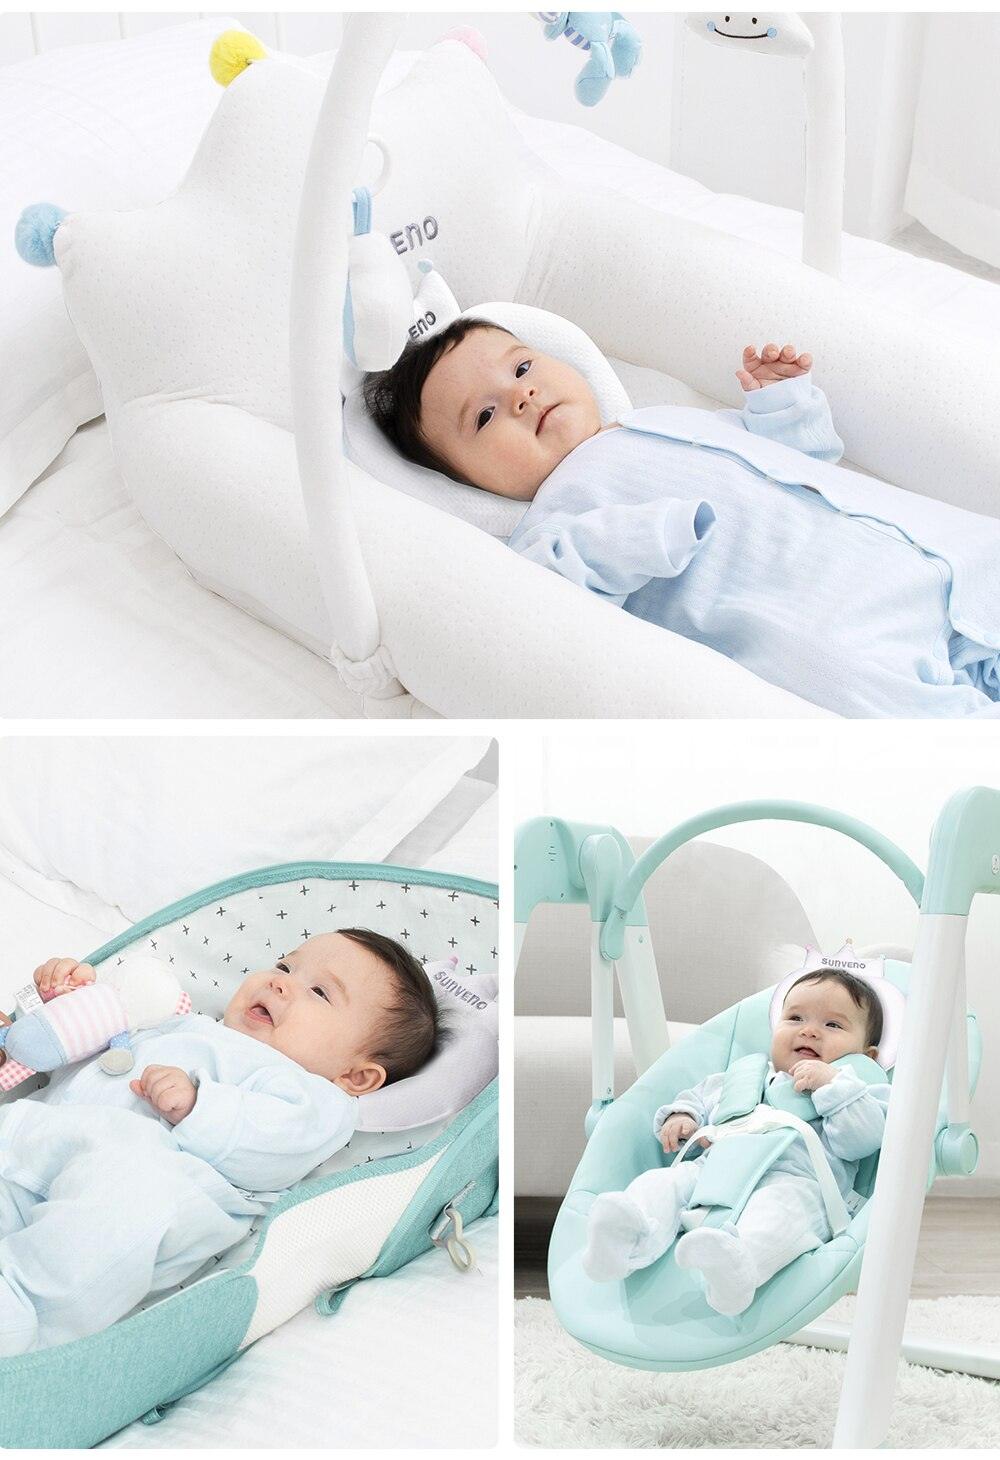 Baby Pillow Infant Newborn Sleep Support - Concave Cartoon Pillow Cushion Prevent Flat Head (3X1)